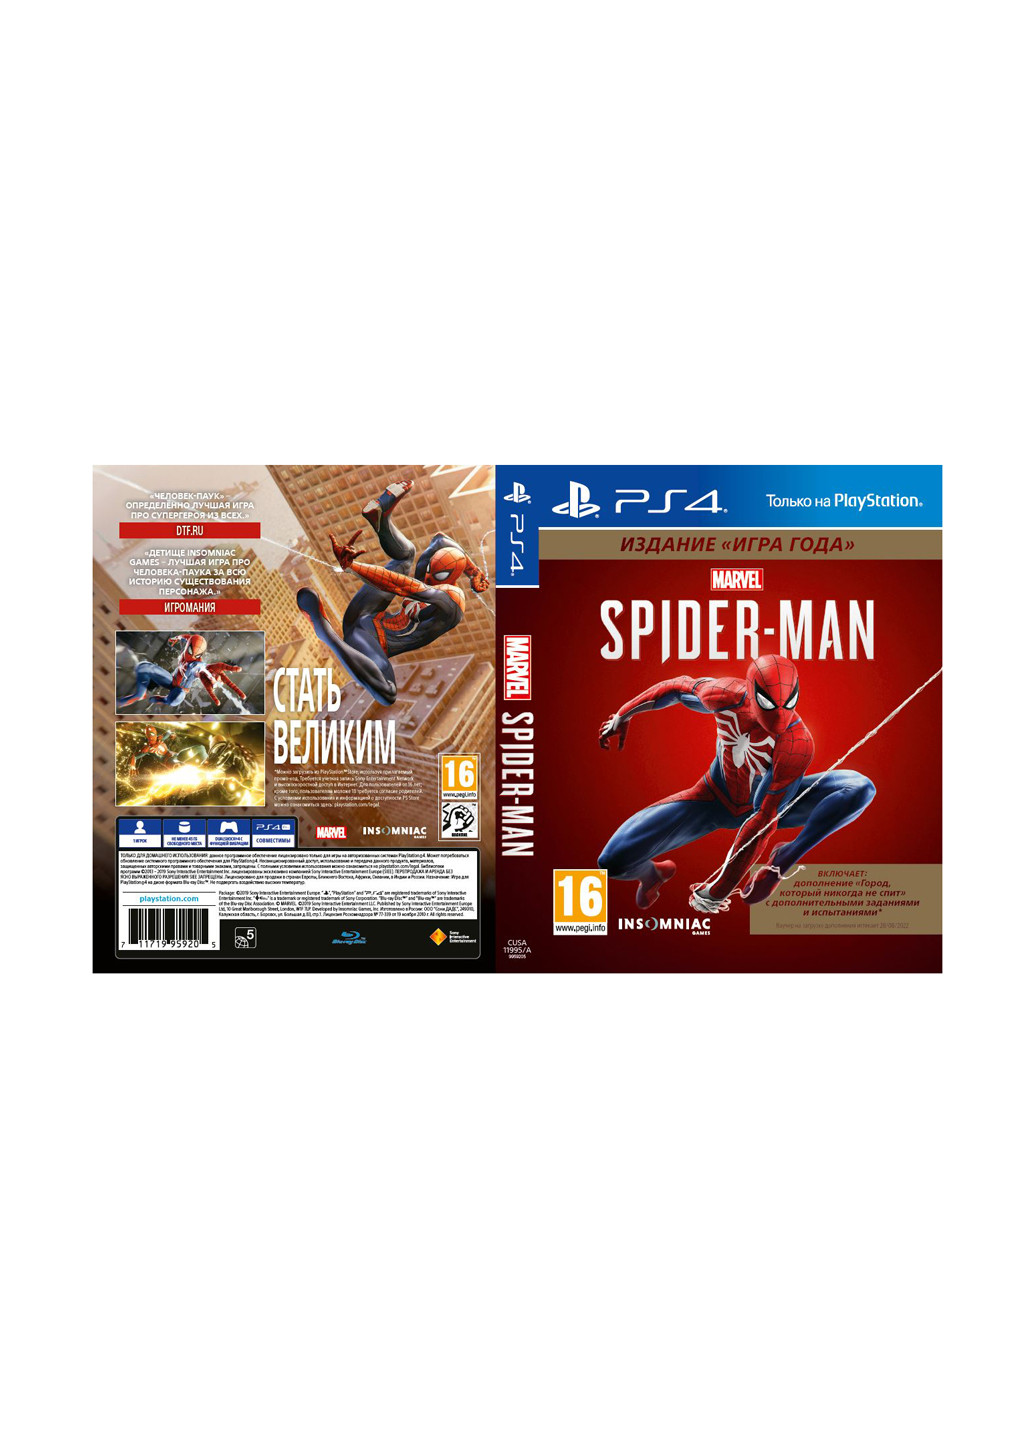 Games Software игра ps4 marvel spider-man. издание «игра года» [blu-ray диск] (150134272)